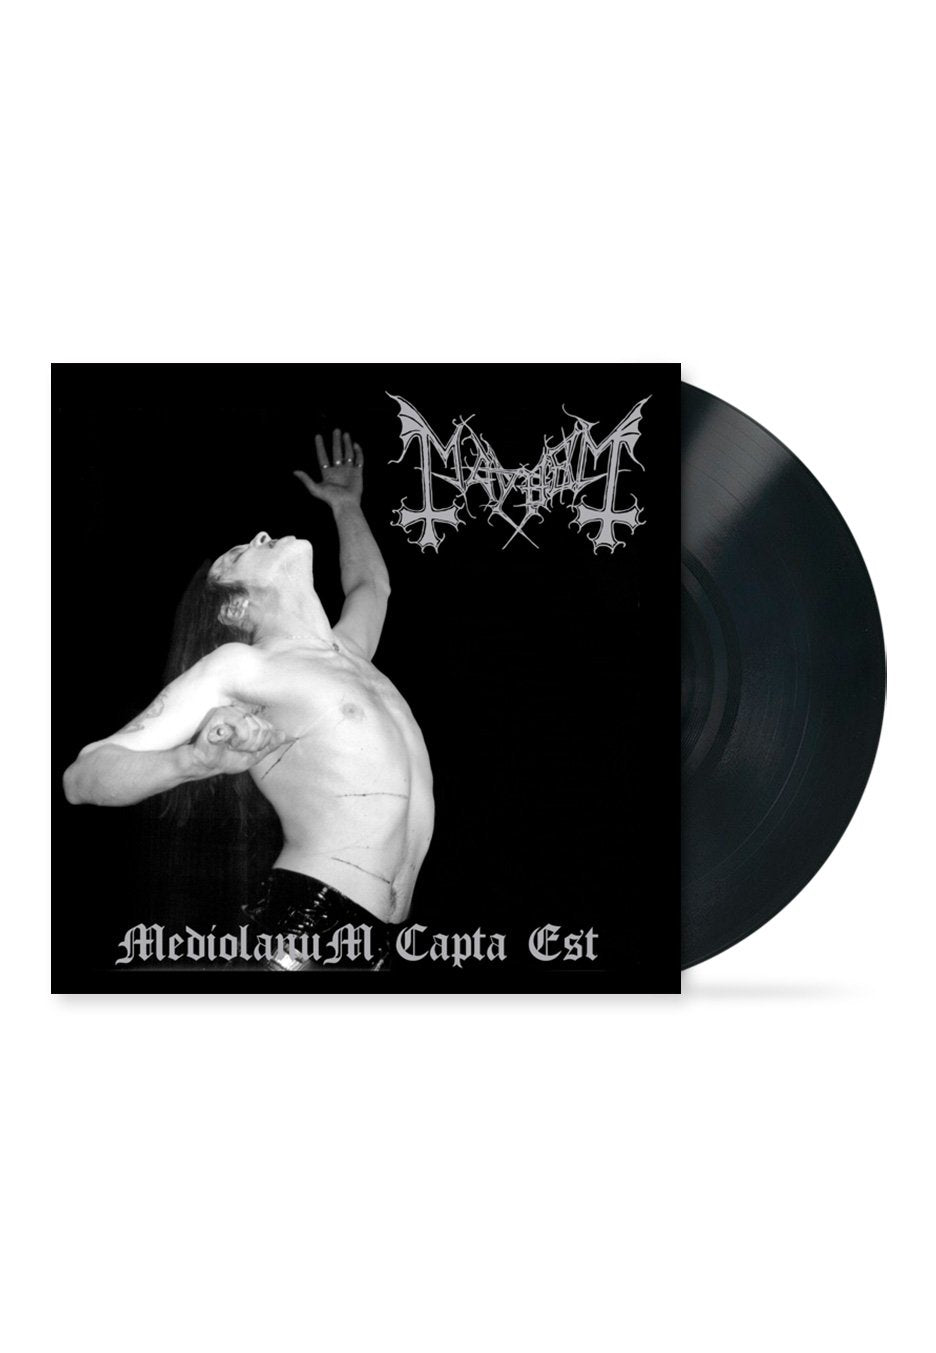 Mayhem - Mediolanum Capta Est - Vinyl